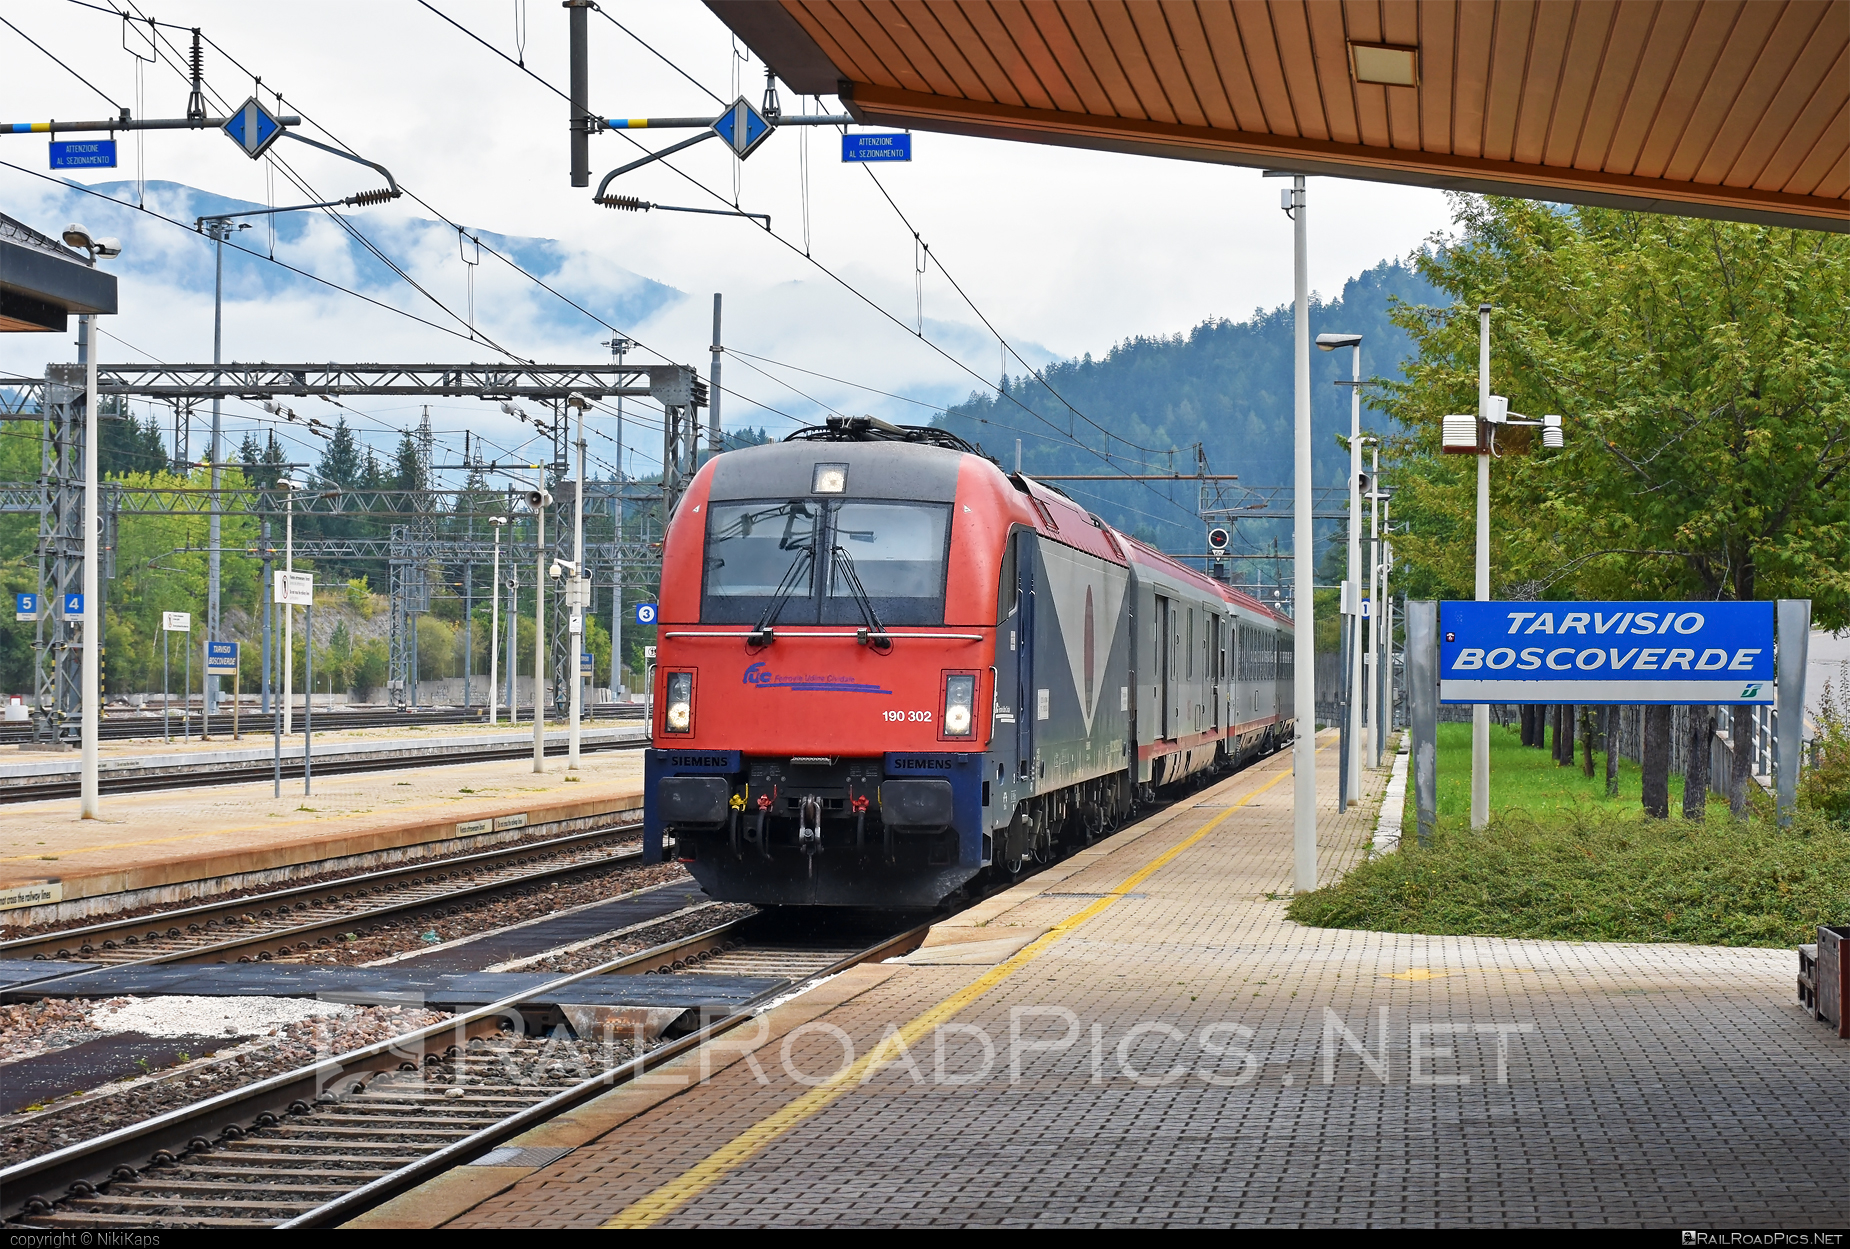 Siemens ES 64 U4 - 190 302 operated by Società Ferrovie Udine Cividale #es64 #es64u4 #eurosprinter #fuc #micotra #siemens #siemensEs64 #siemensEs64u4 #siemenstaurus #taurus #tauruslocomotive